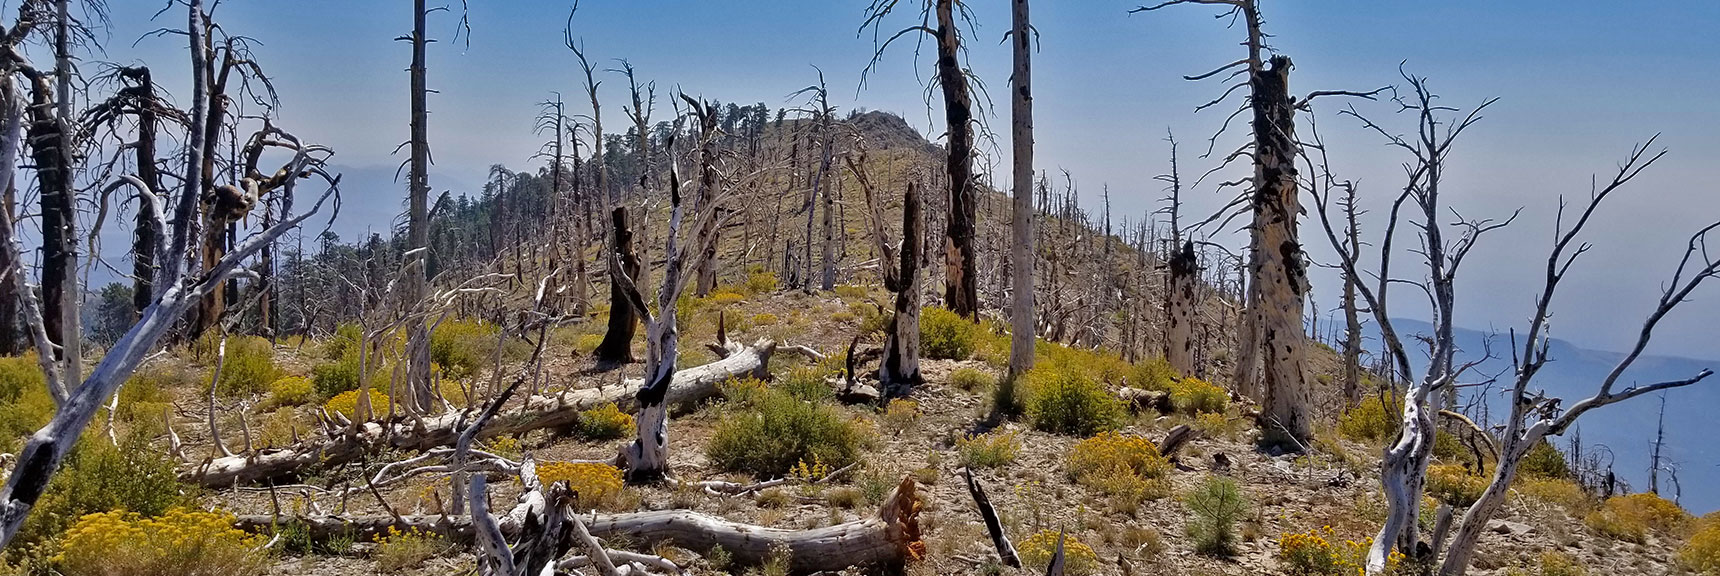 2013 Burn Area on Mid-Upper Sexton Ridge | Griffith Peak Southern Approach from Sexton Ridge Above Lovell Canyon, Nevada